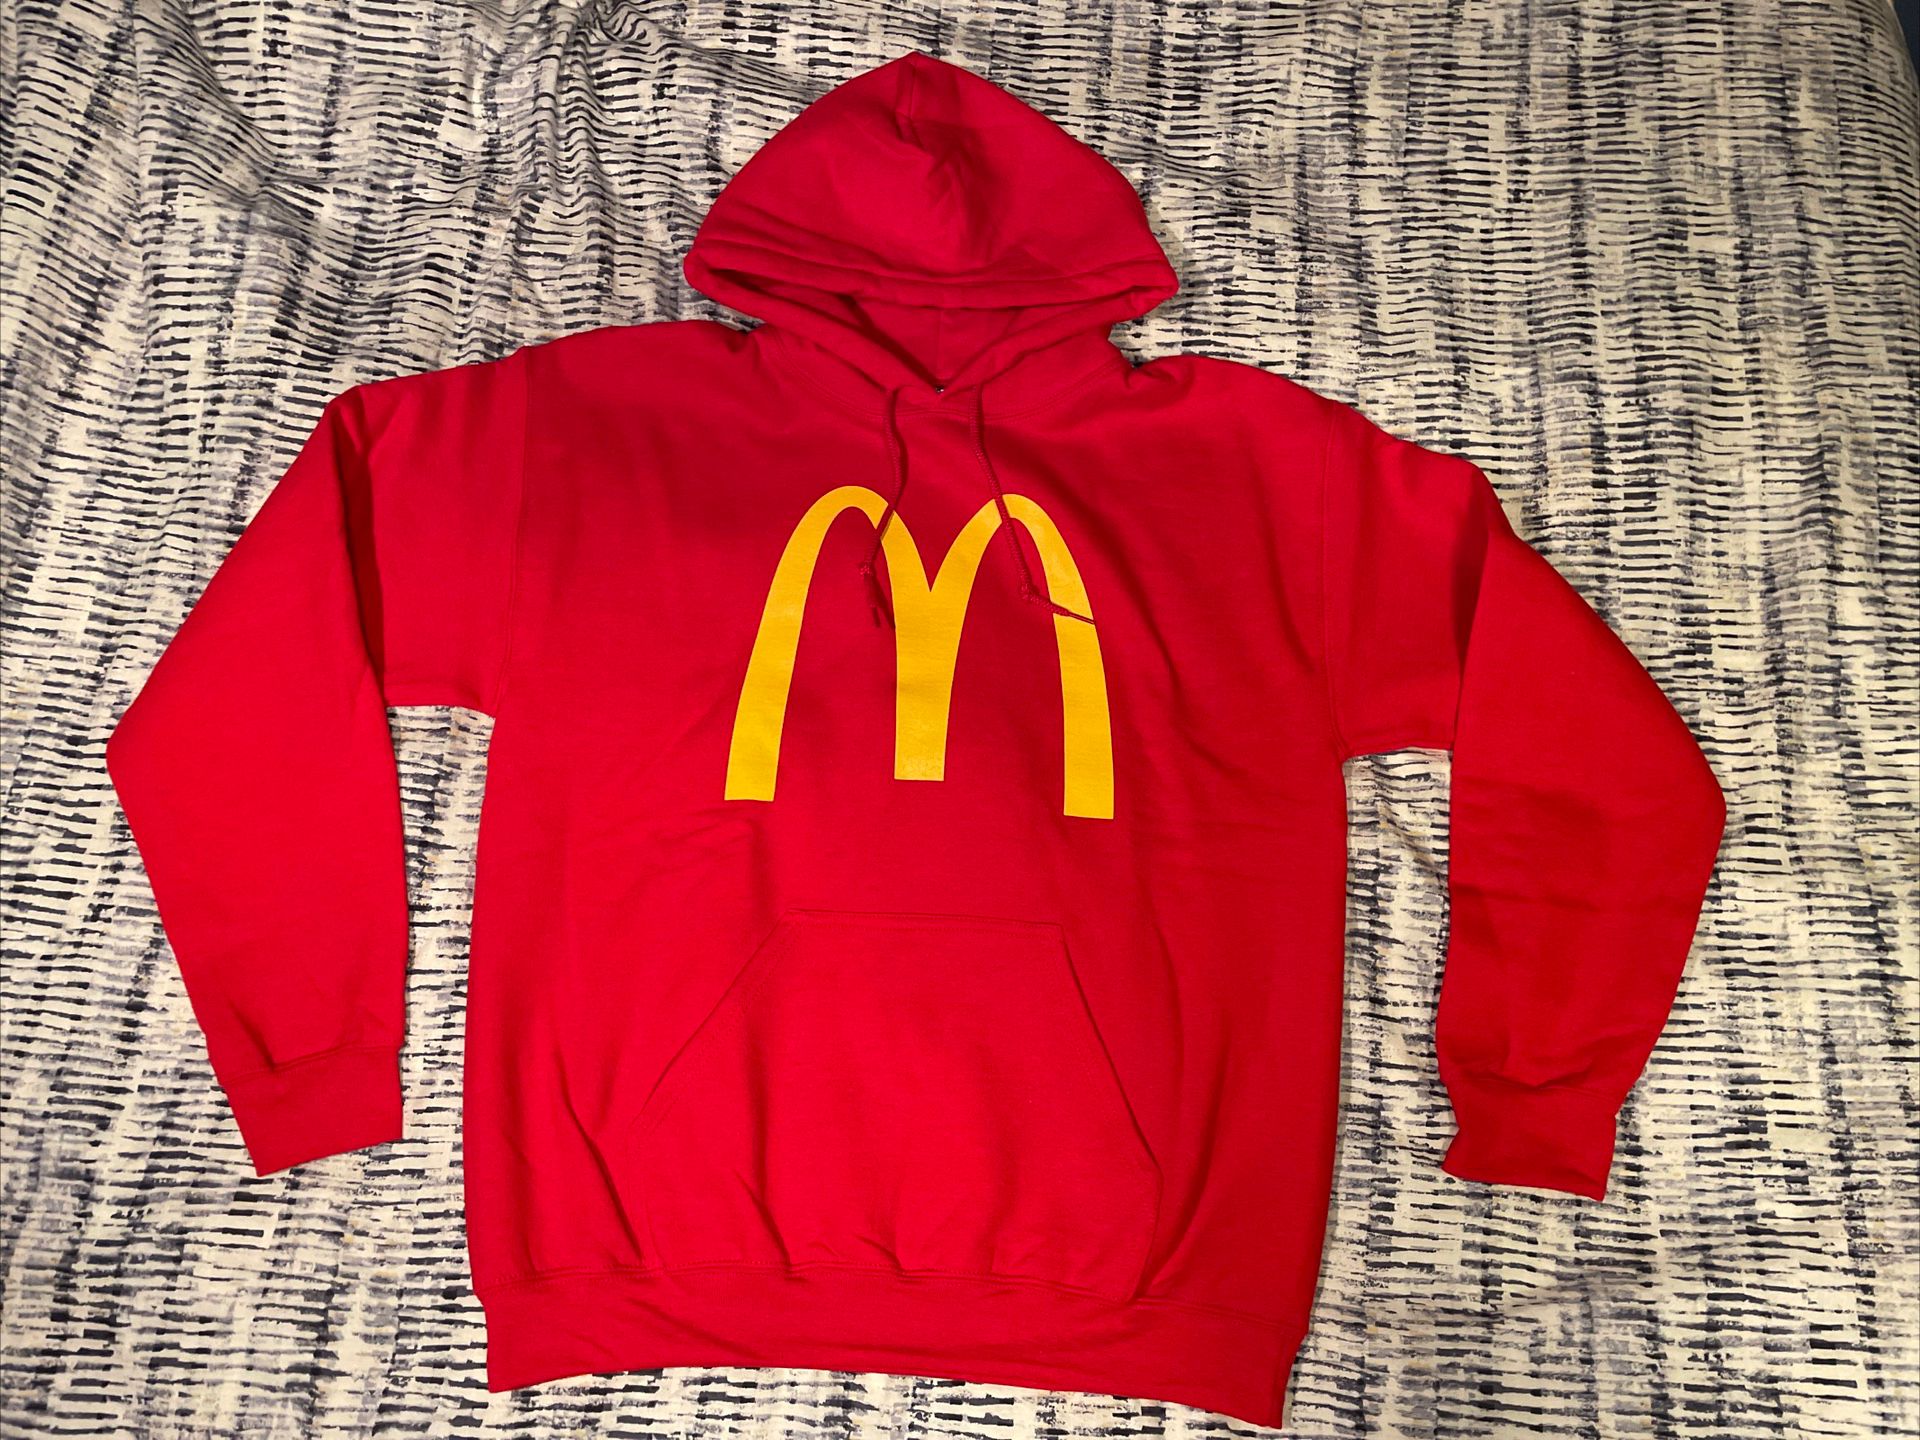 McDonalds Red Golden Arches Hoodie Sweatshirt M Employee Uniform Excellent